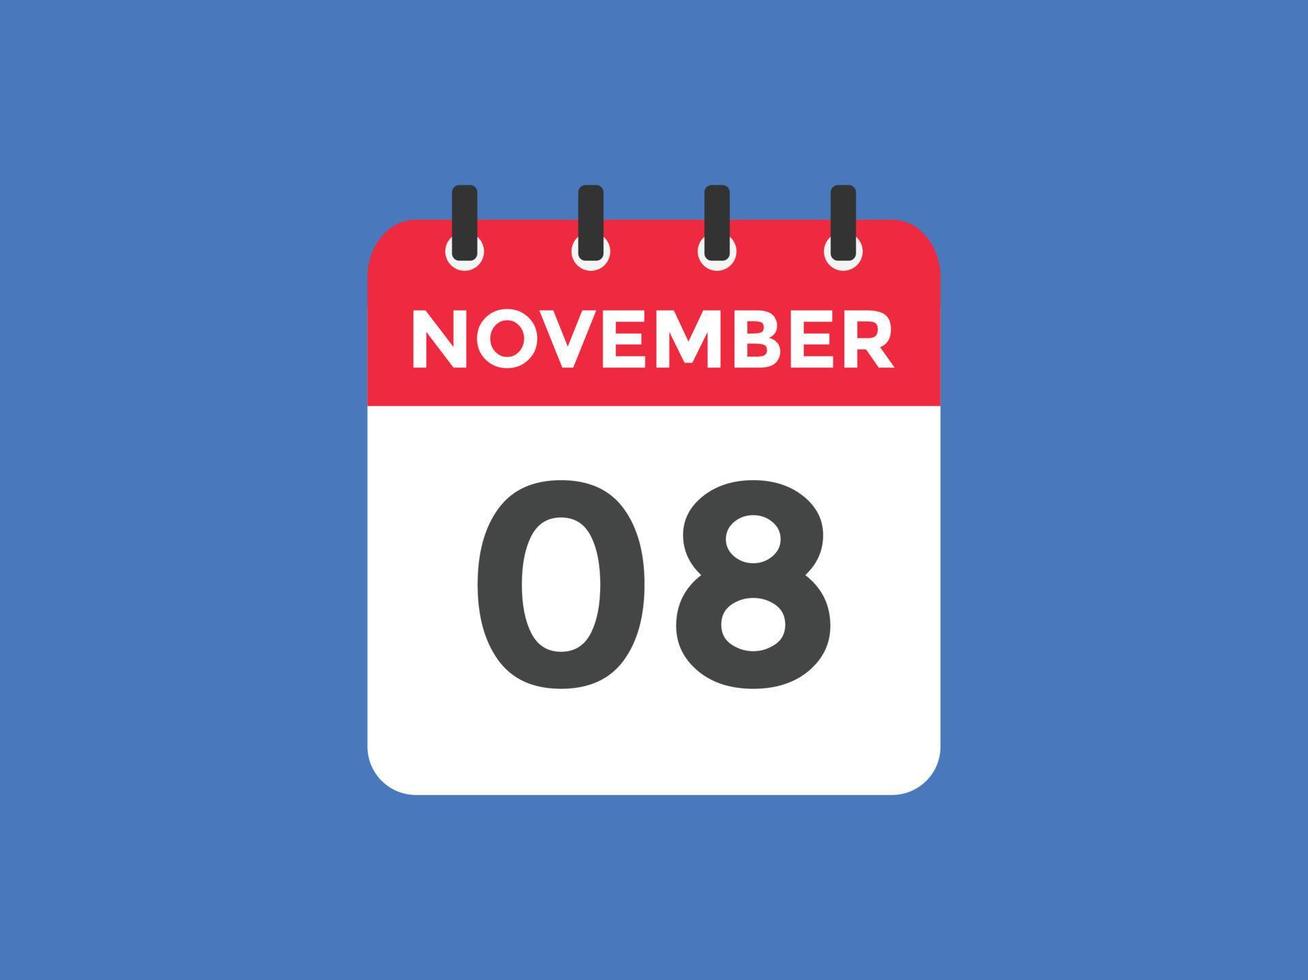 8. November Kalendererinnerung. 8. november tägliche kalendersymbolvorlage. Kalender 8. November Icon-Design-Vorlage. Vektor-Illustration vektor